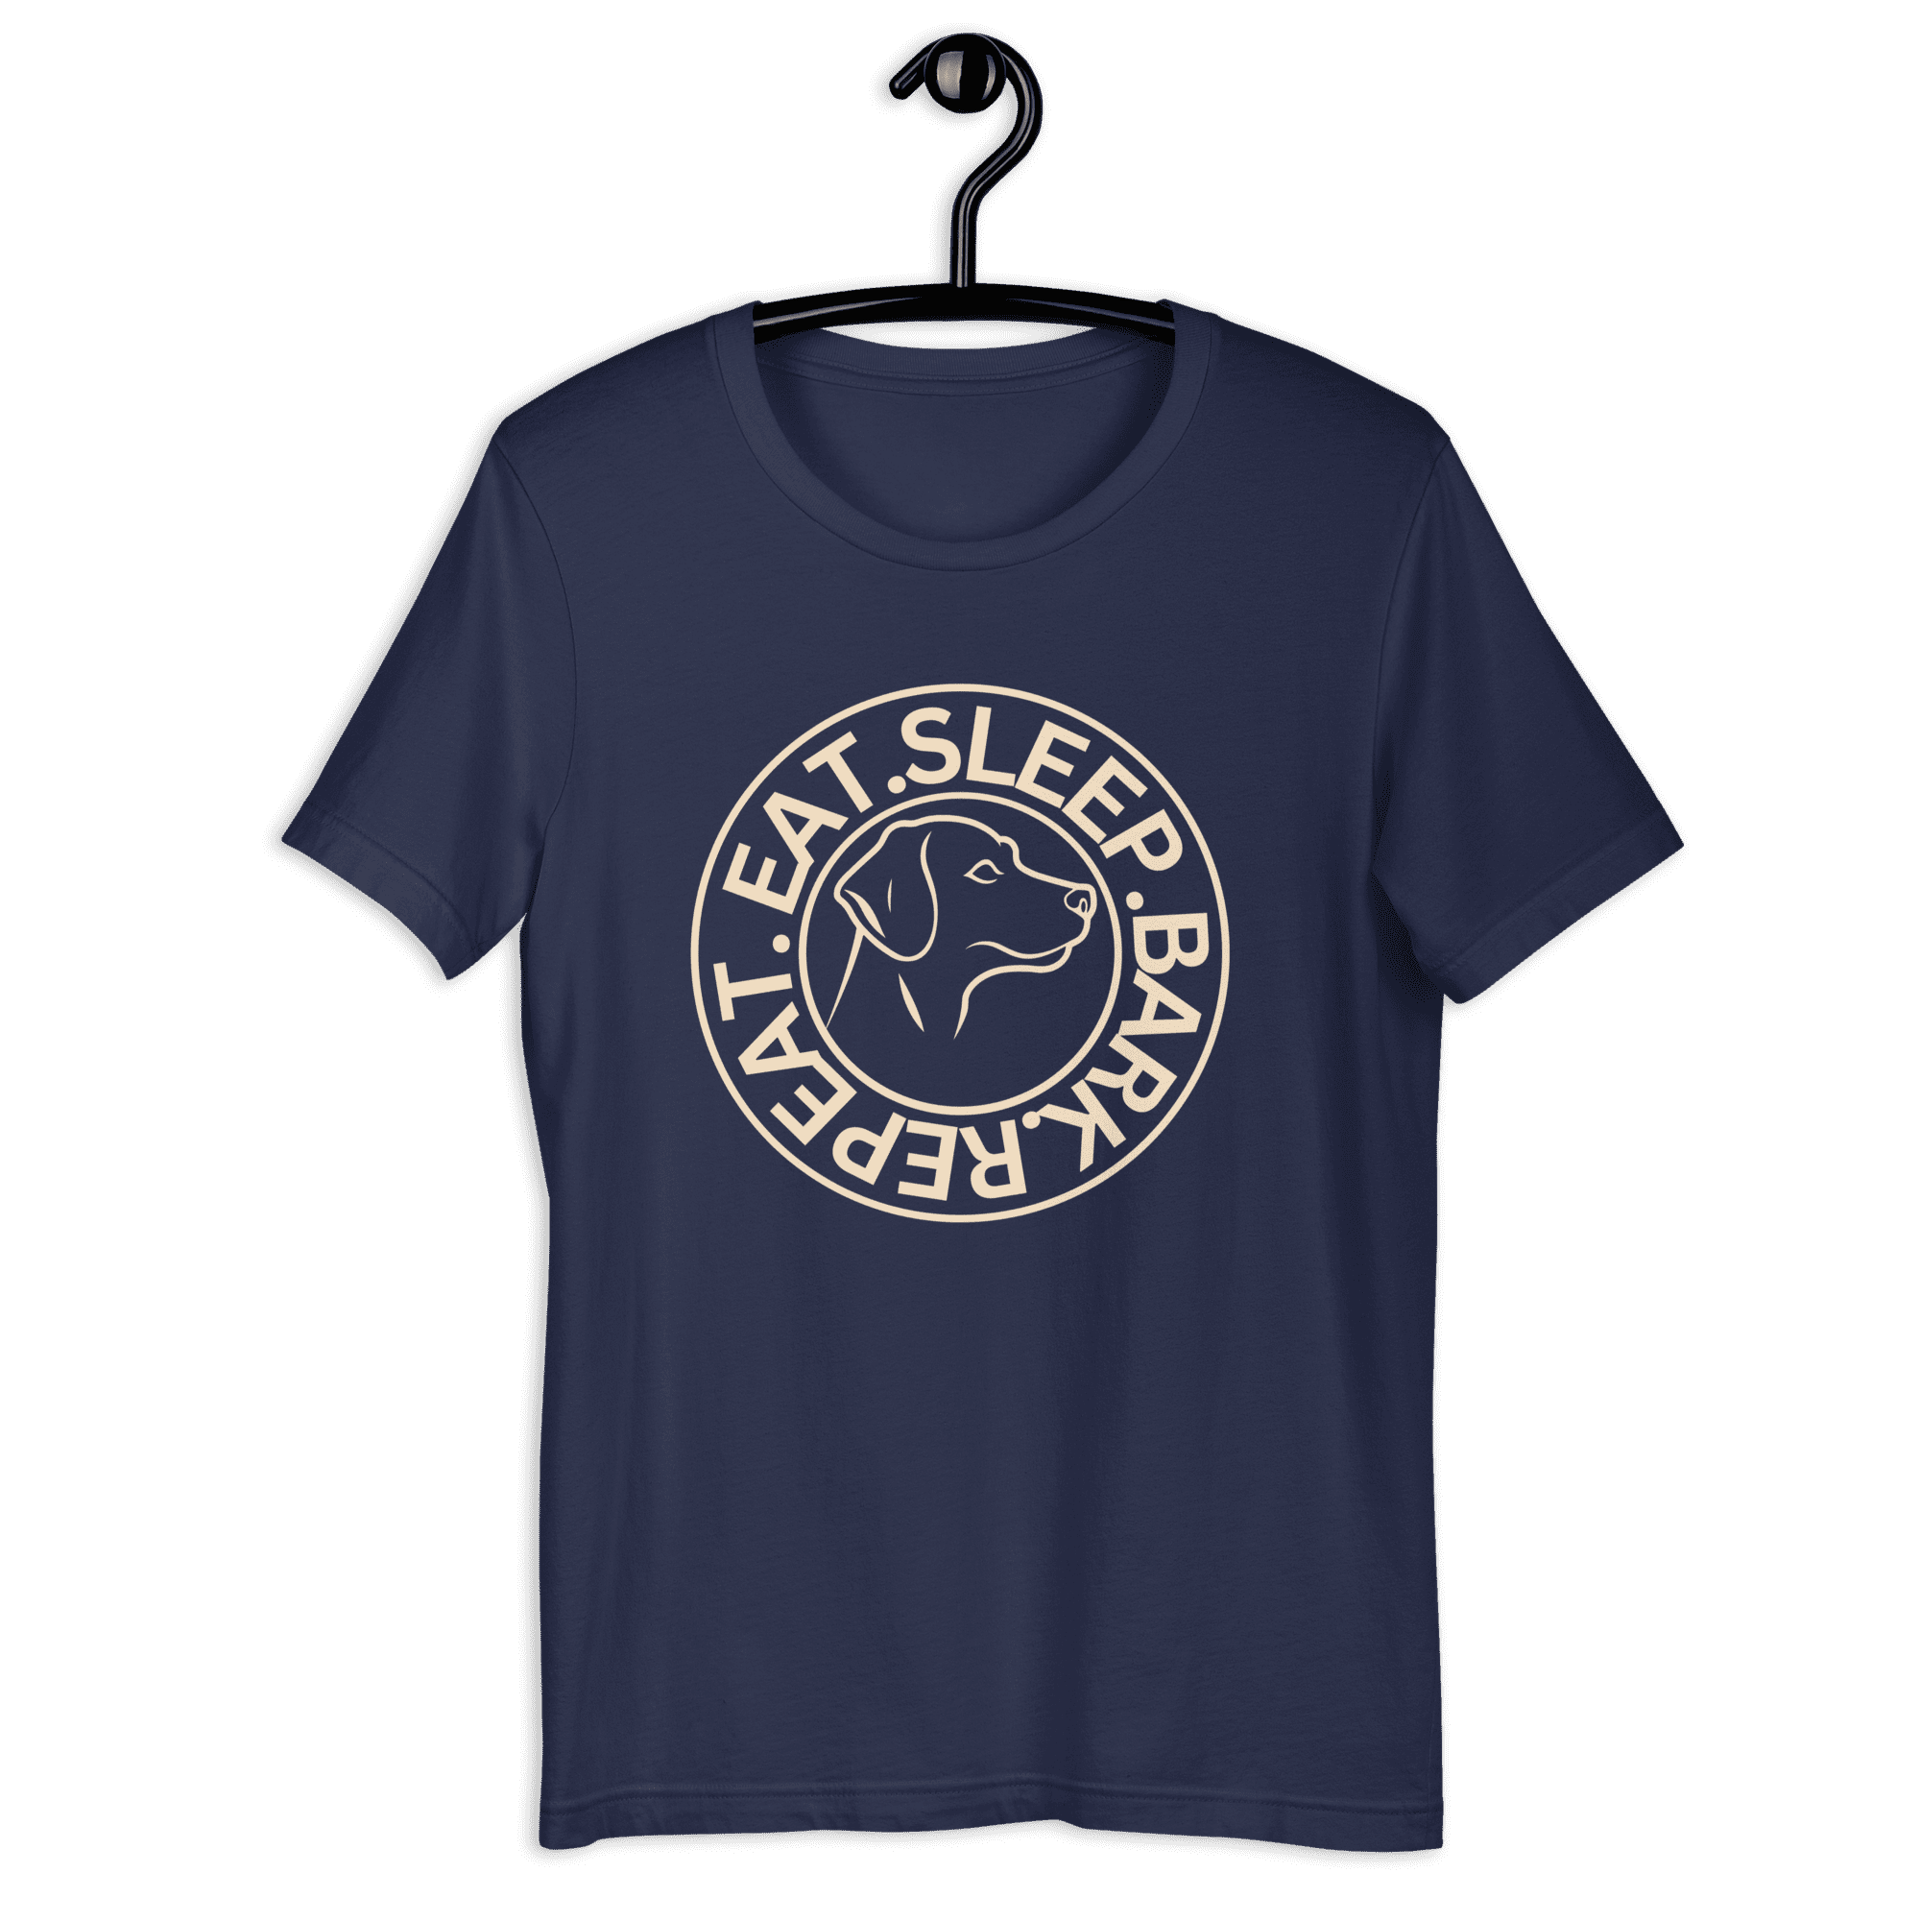 Eat Sleep Bark Repeat Labrador Retriever Unisex T-Shirt. Dark Blue